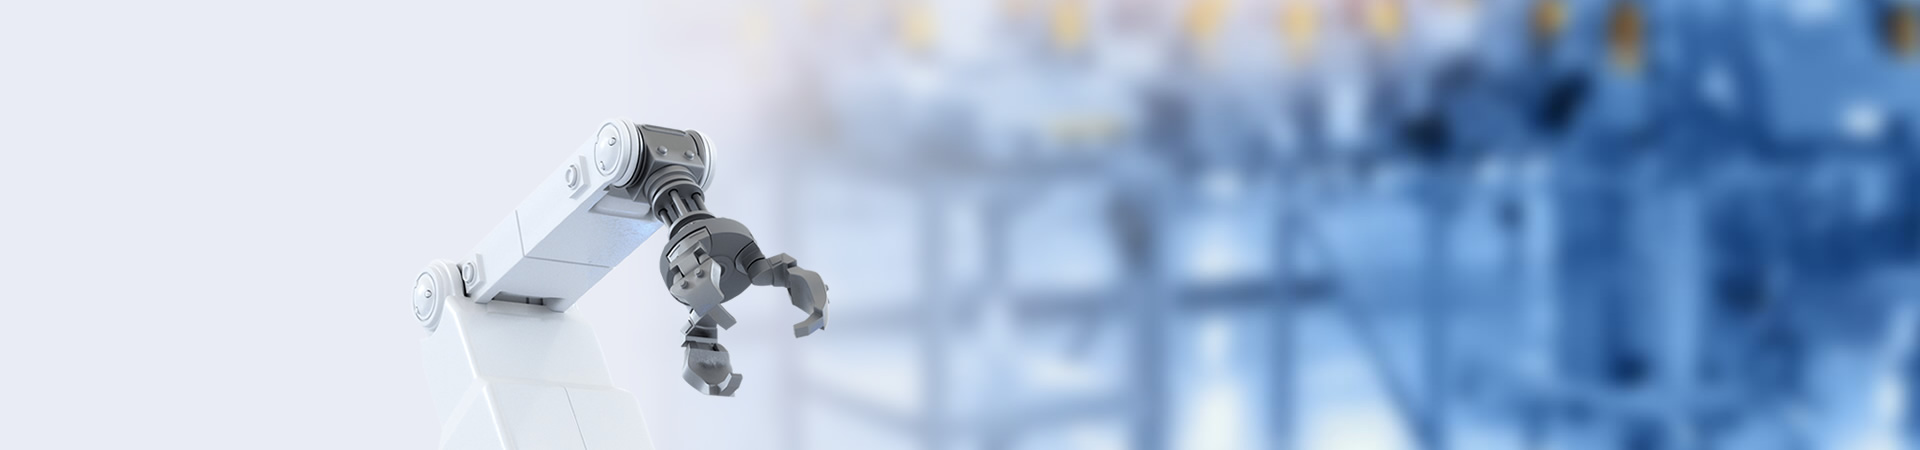 Logotipo personalizado Hojalata Estaño Kpop Dibujos animados Anime Botón Pin Personalizado 3D Esmalte Masónico Militar Ejército Explorador Piloto Ala Capellán Guardia de seguridad Oficial Insignia de metal